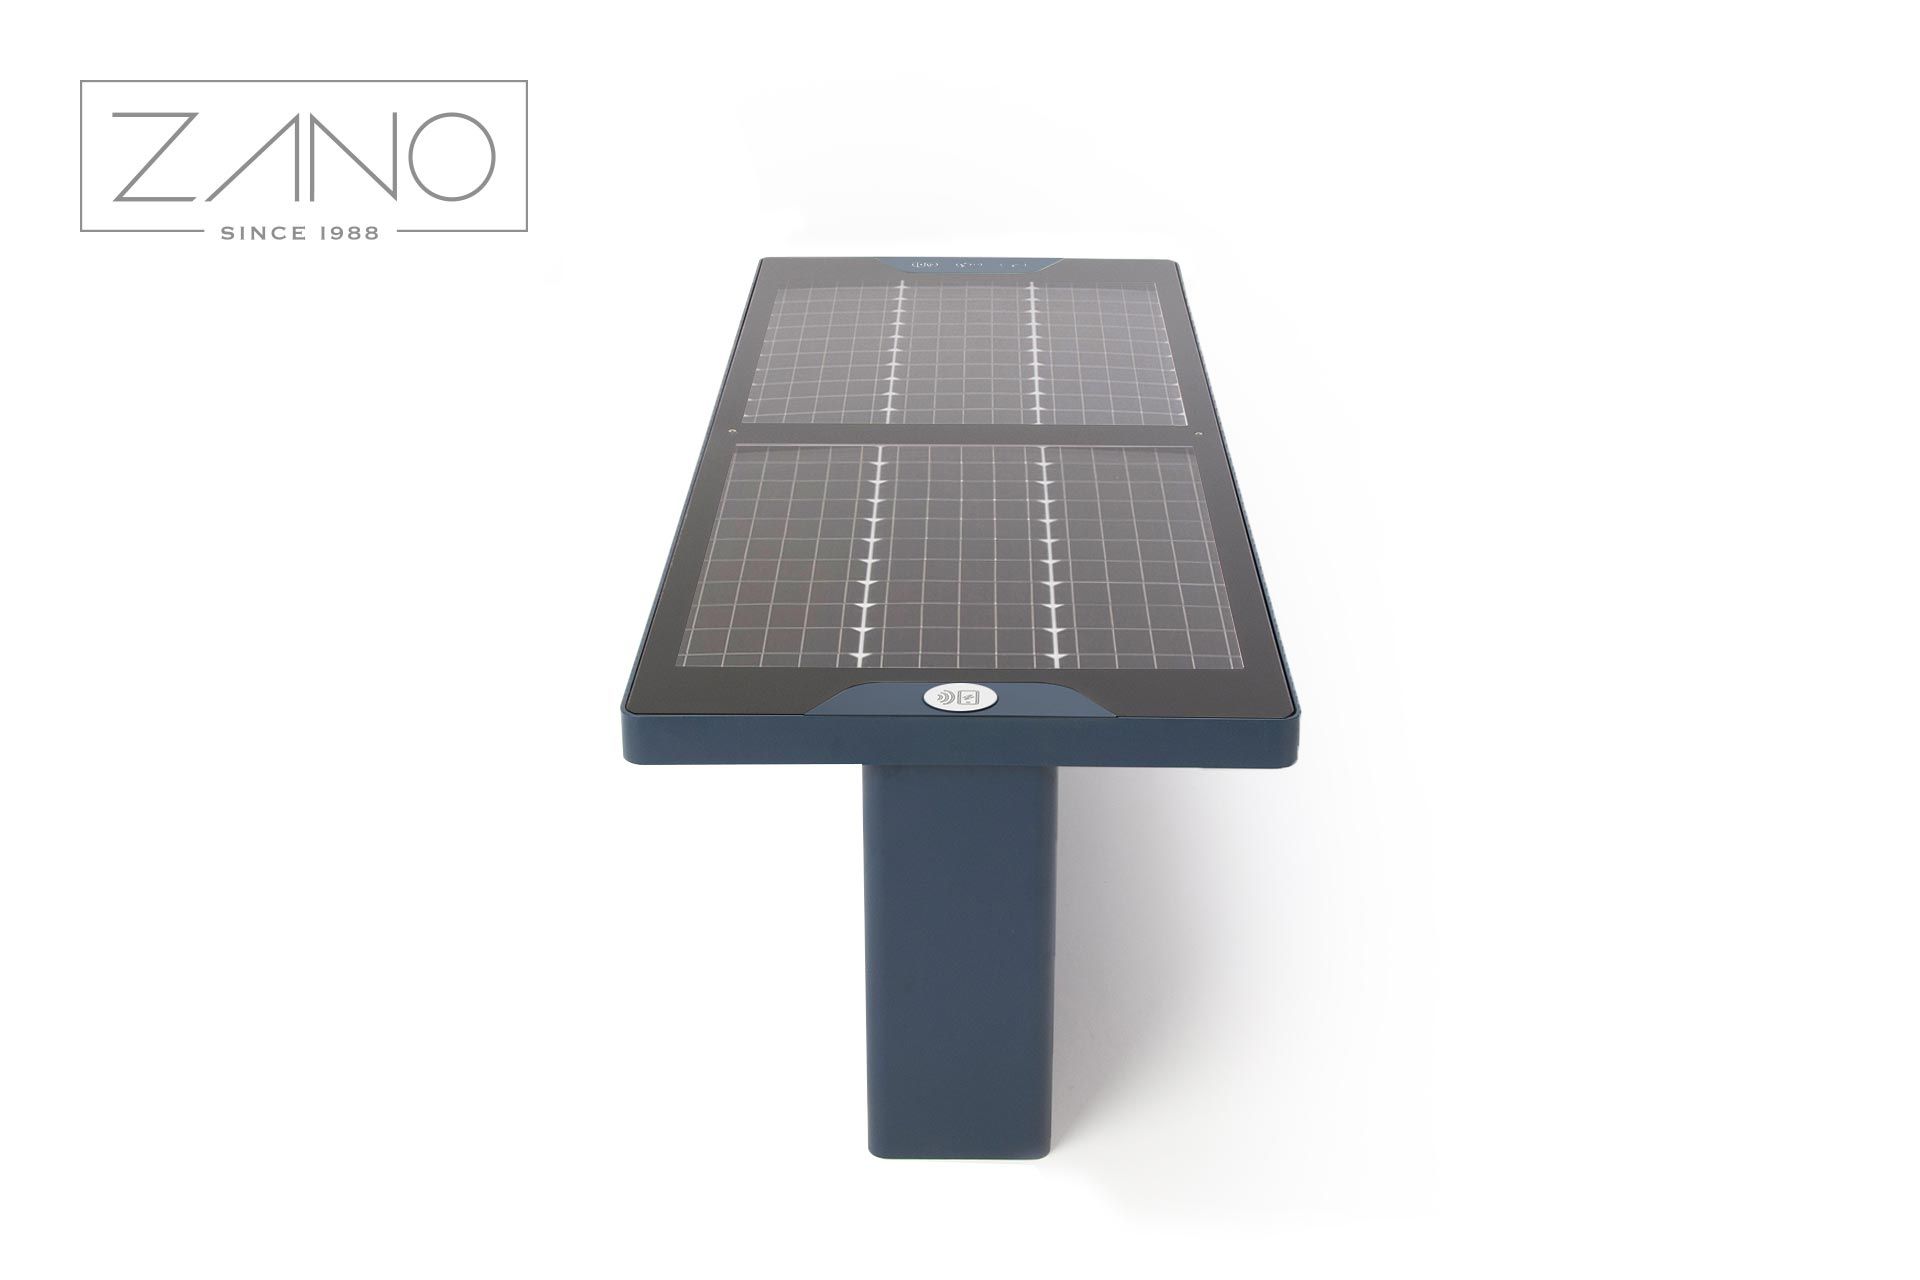 Scandik solar bench made by ZANO Street Furniture